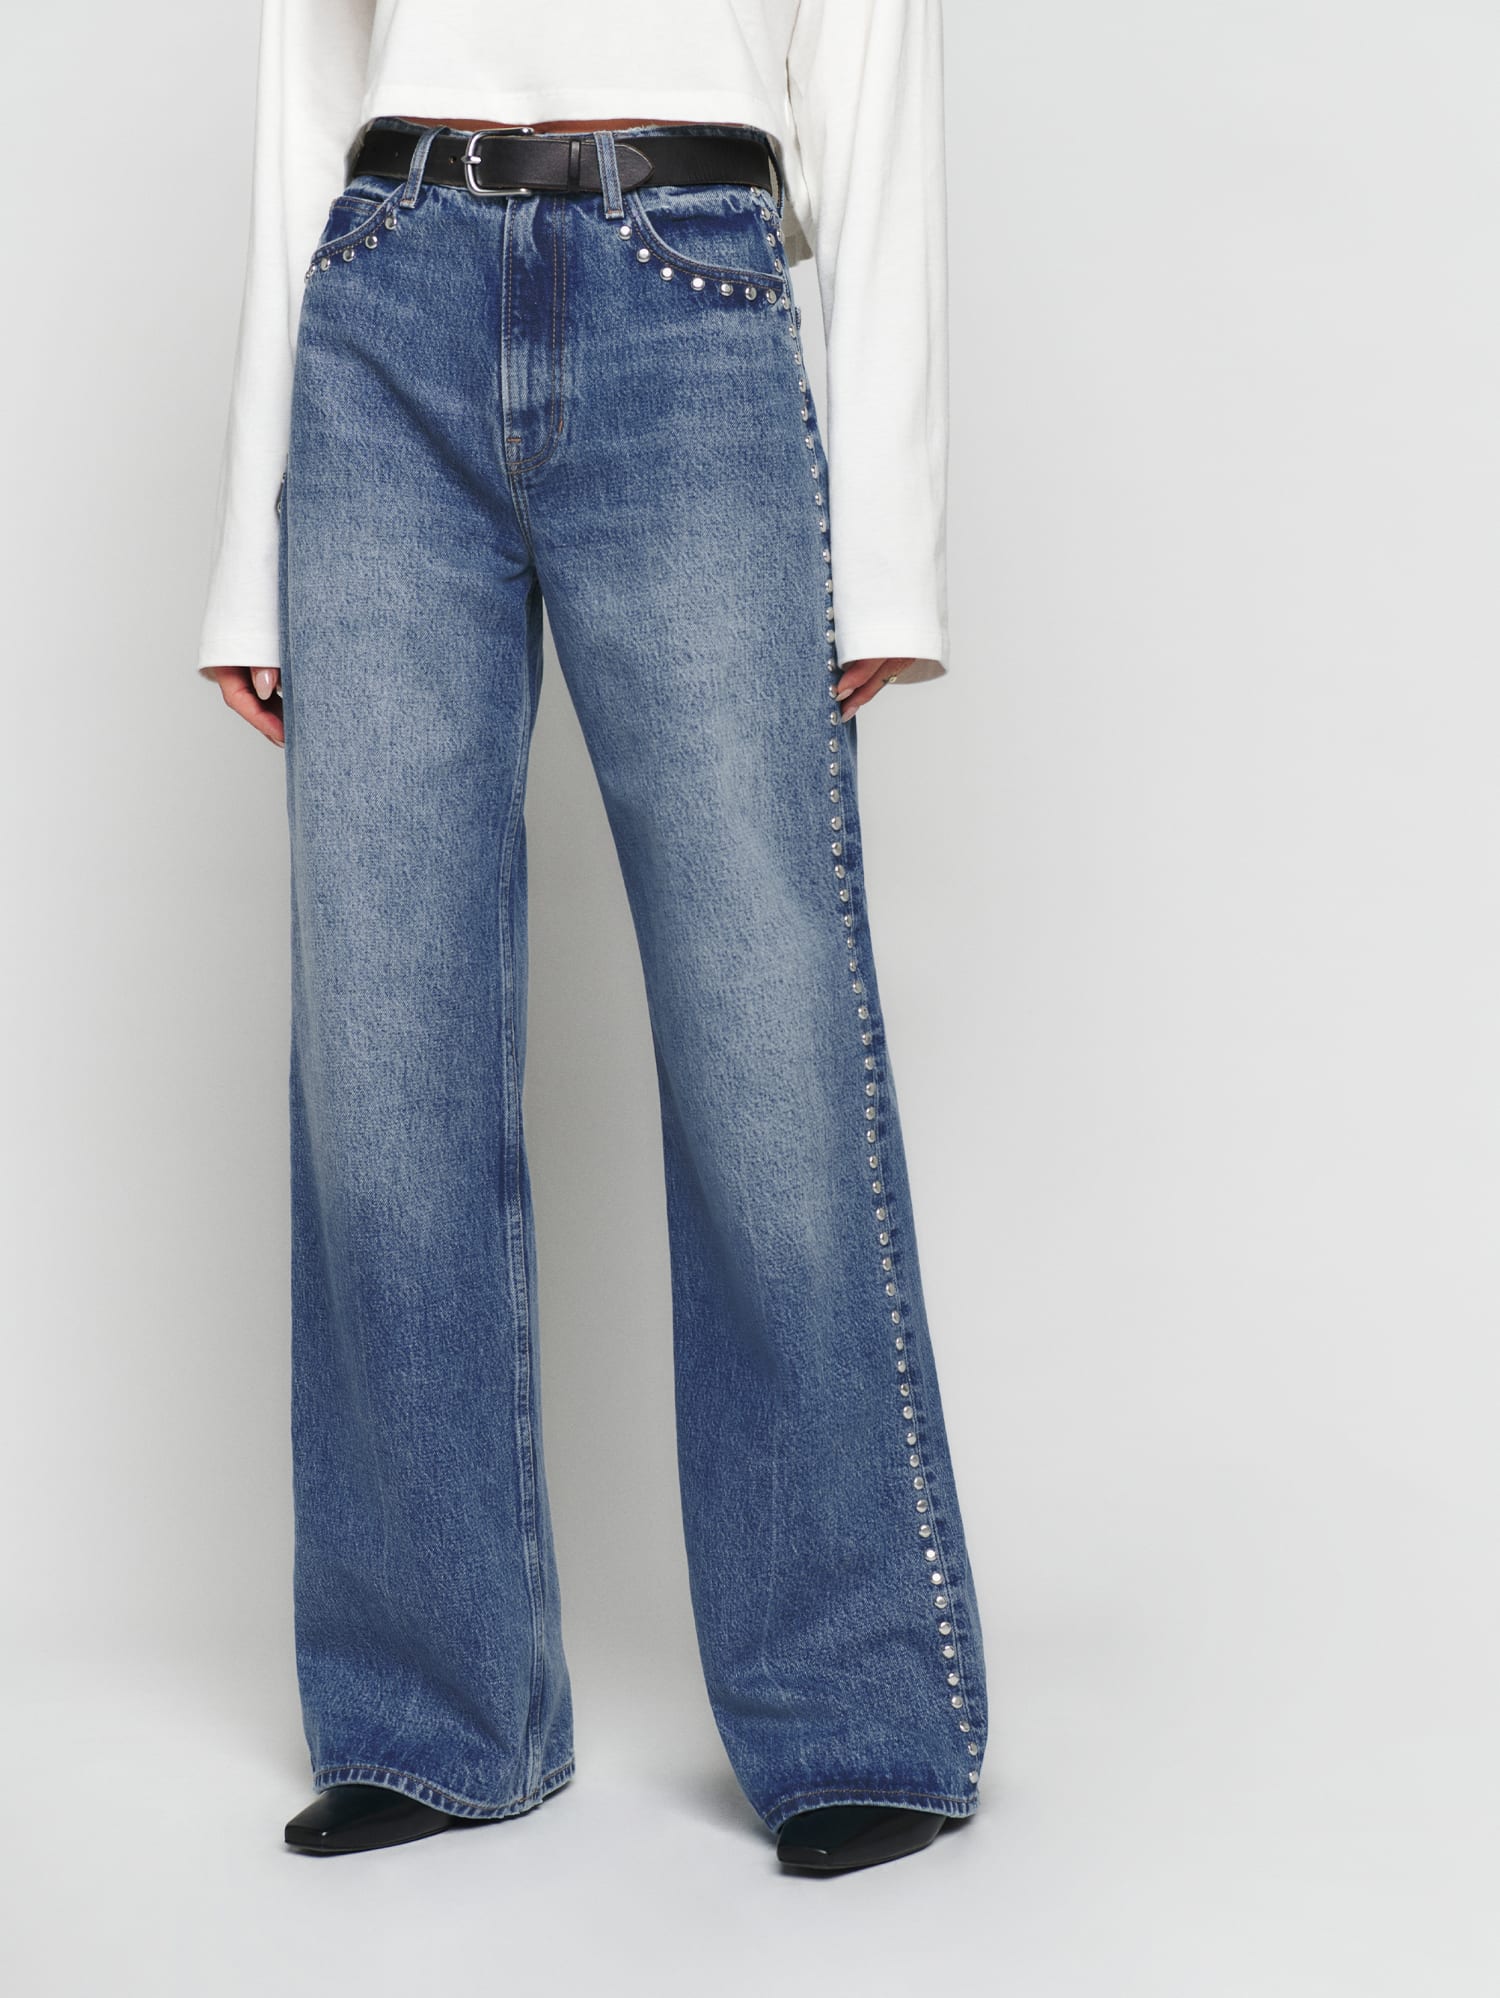 Apt 9 Jeans -  UK